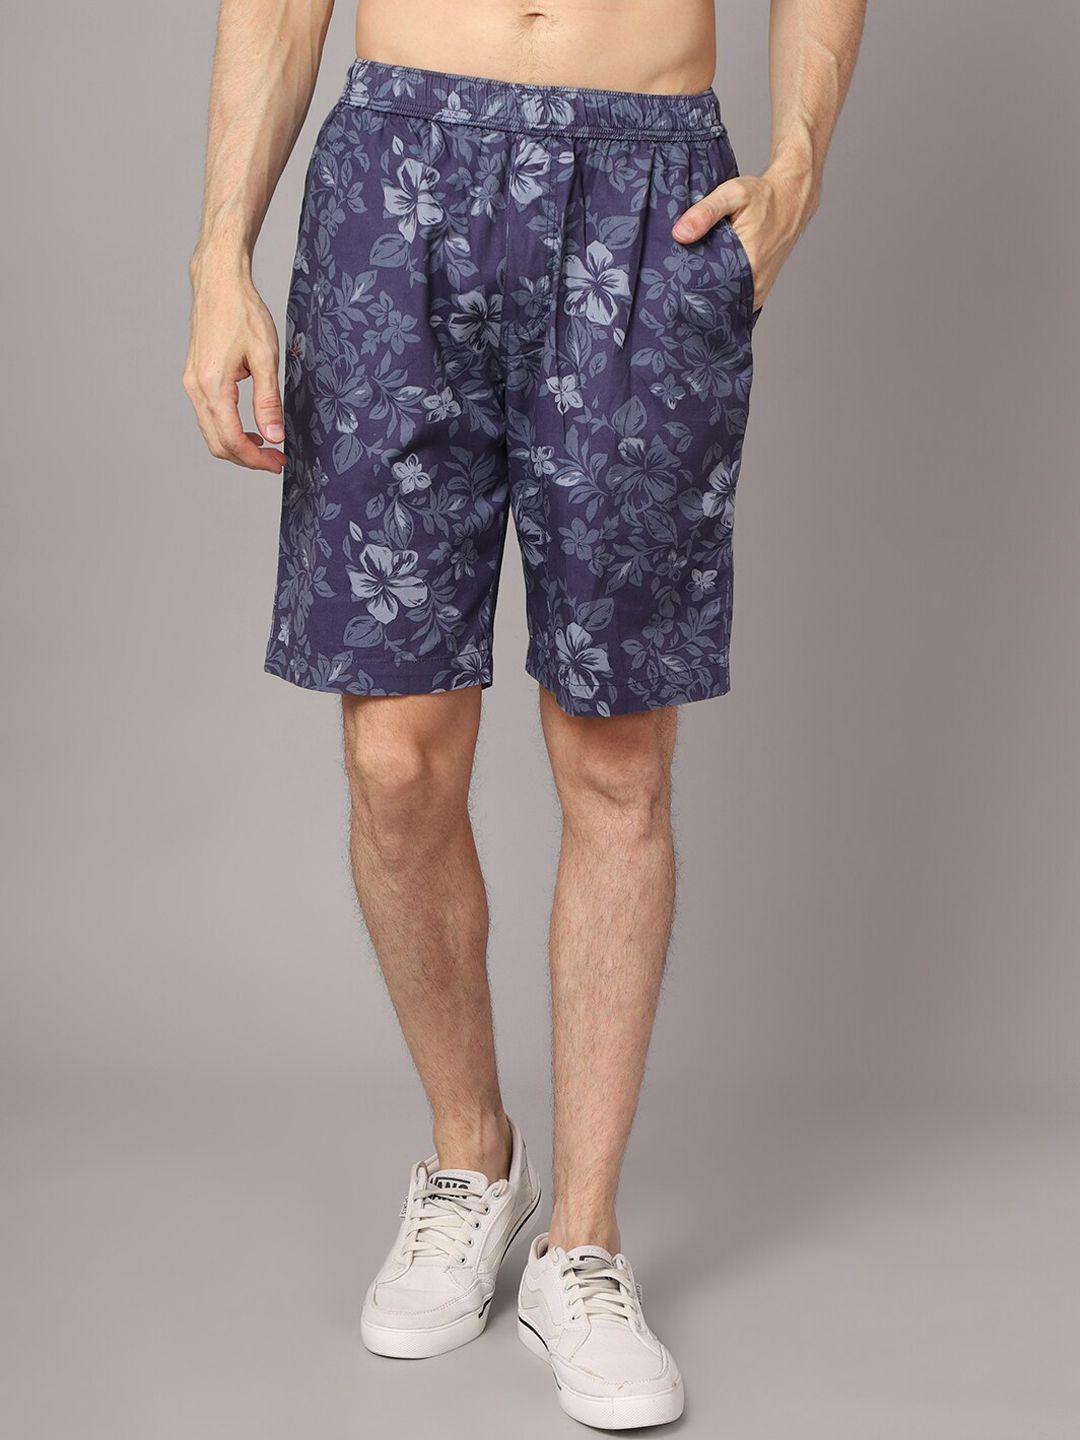 cantabil-men-navy-blue-floral-printed-shorts